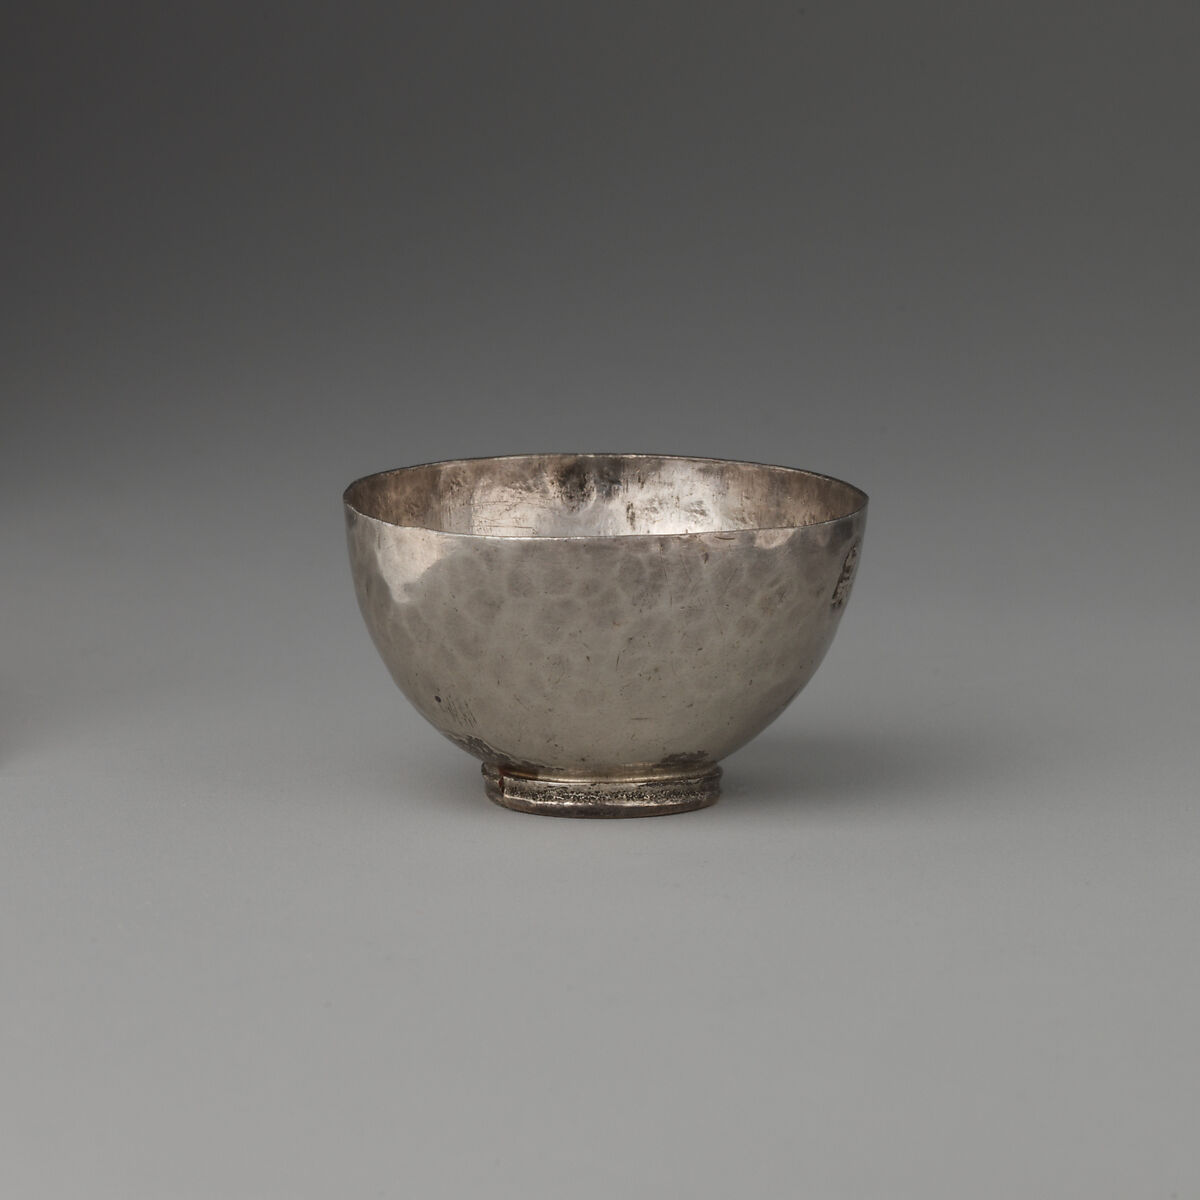 Miniature waste bowl (part of a set), David Clayton (British, active 1689), Silver, British, London 